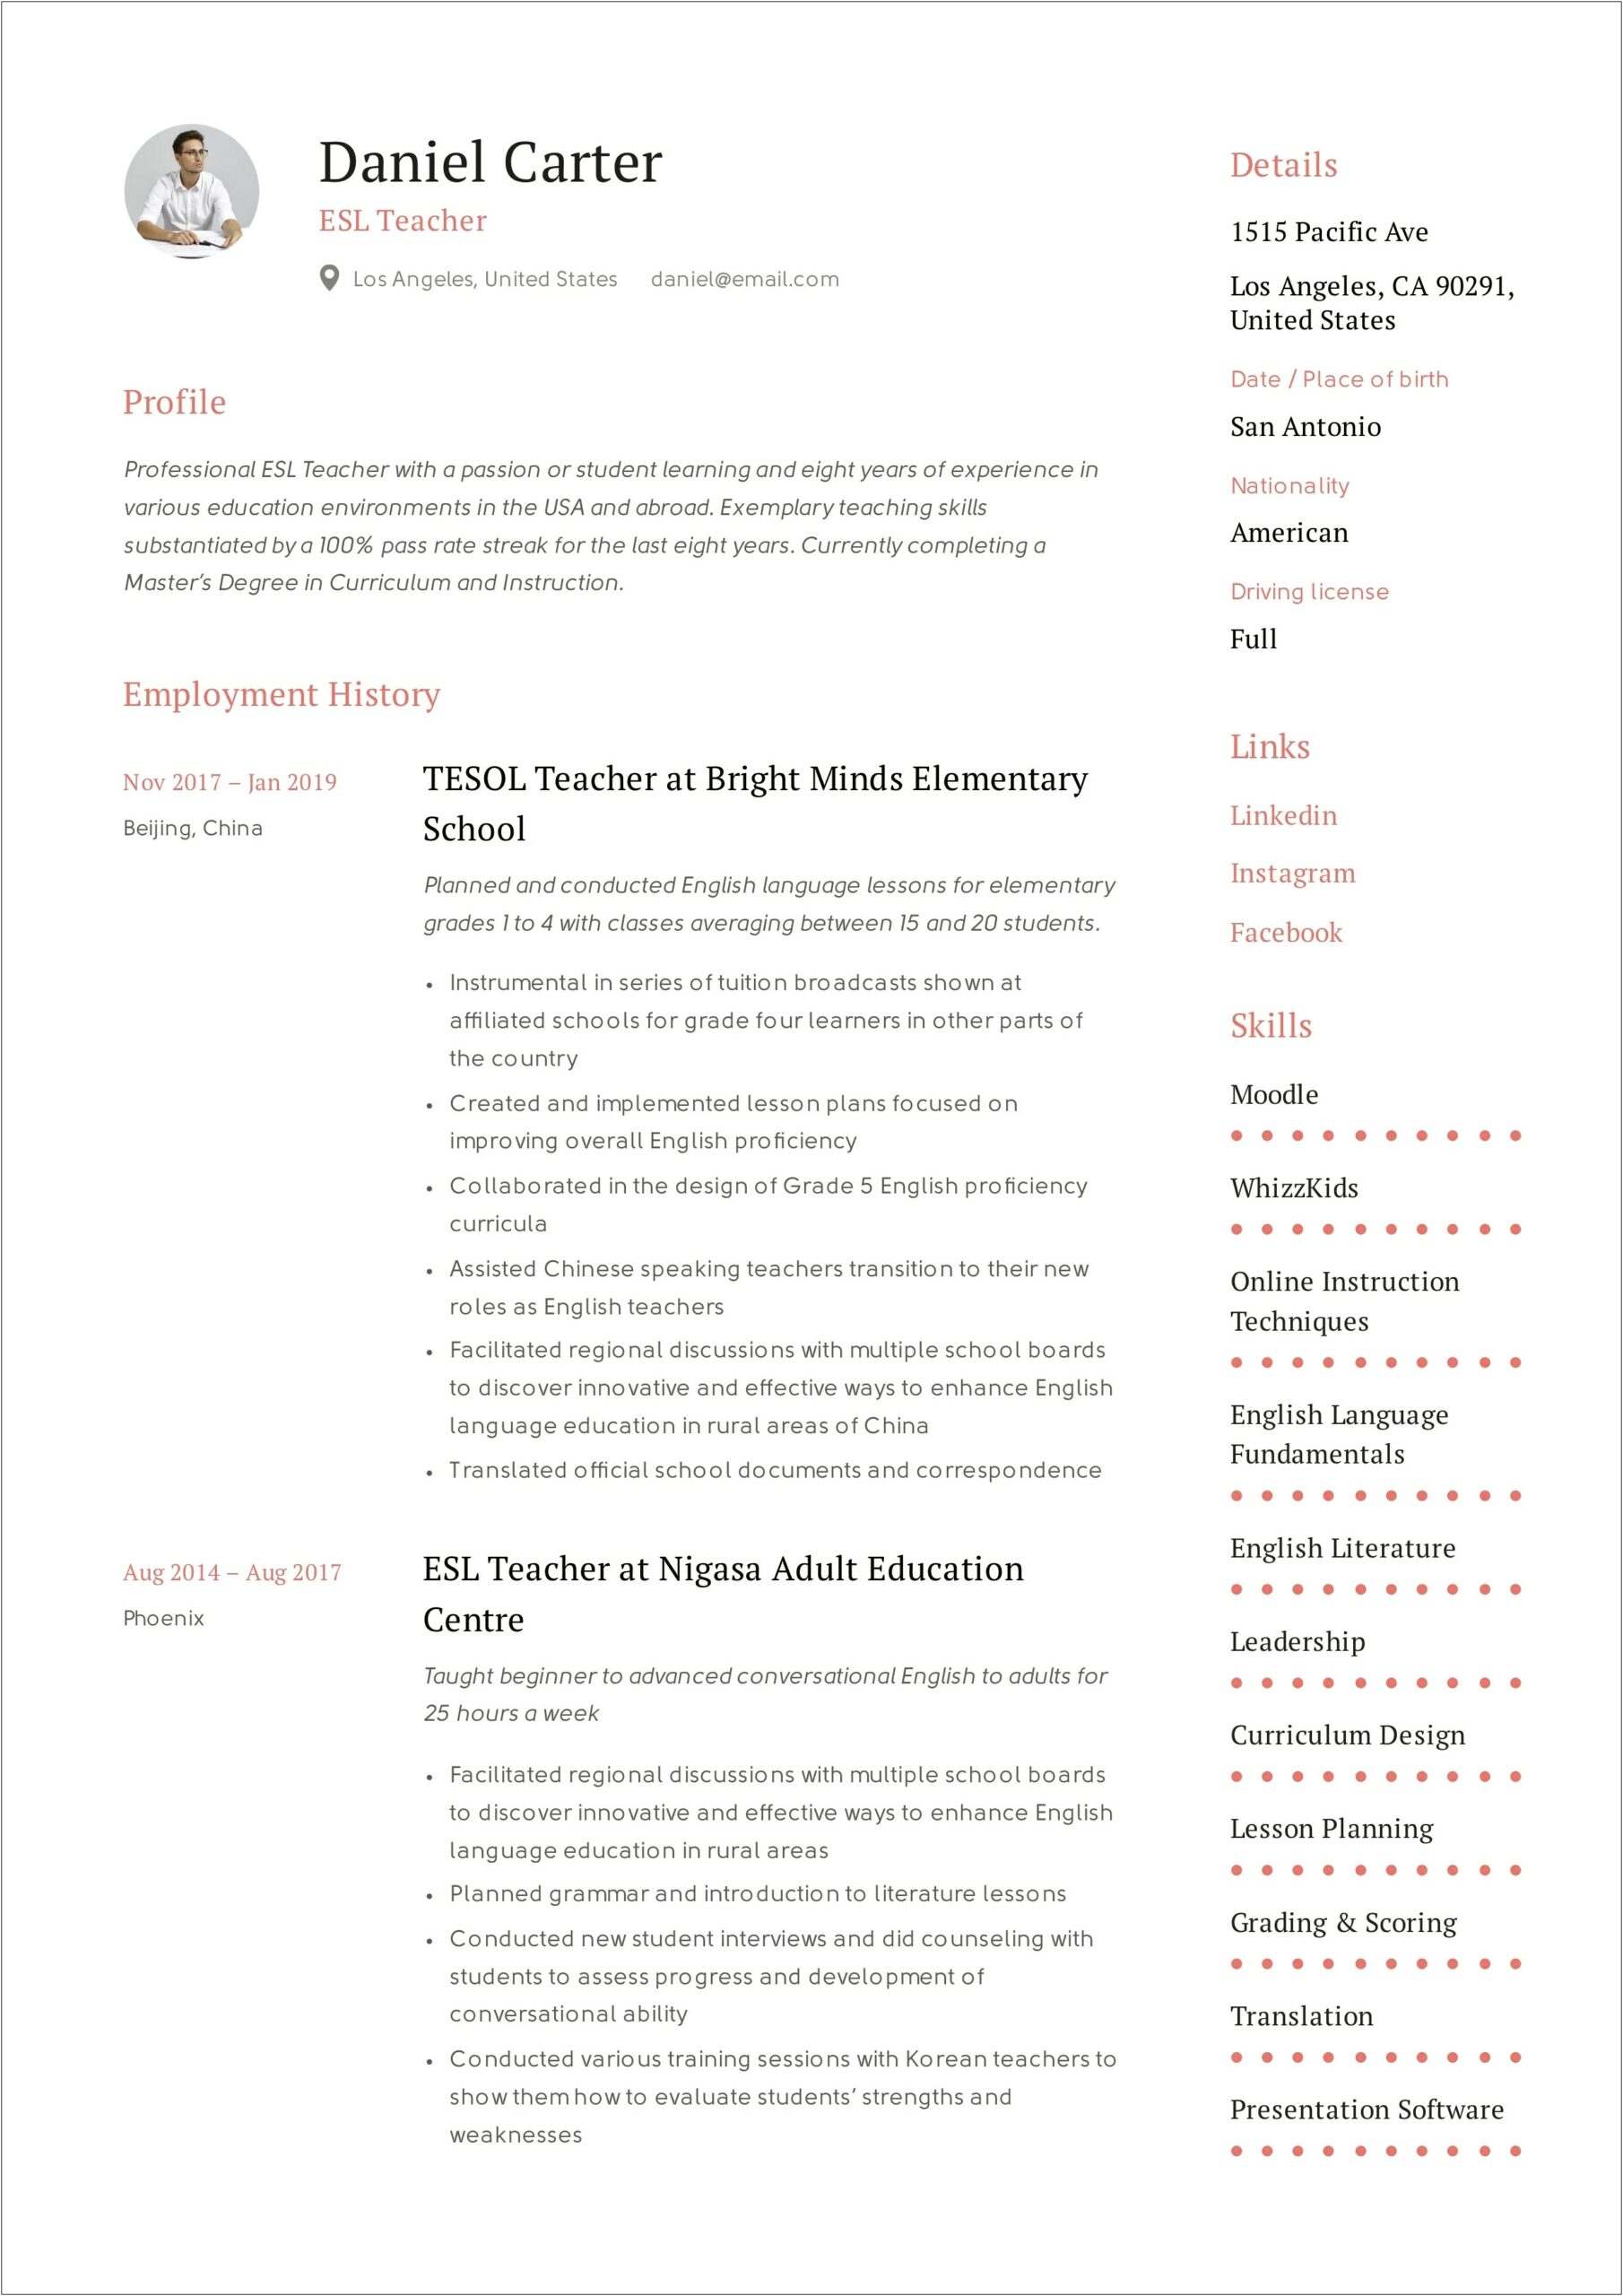 Types Of Tech Proficiencies Good For Teacher Resume